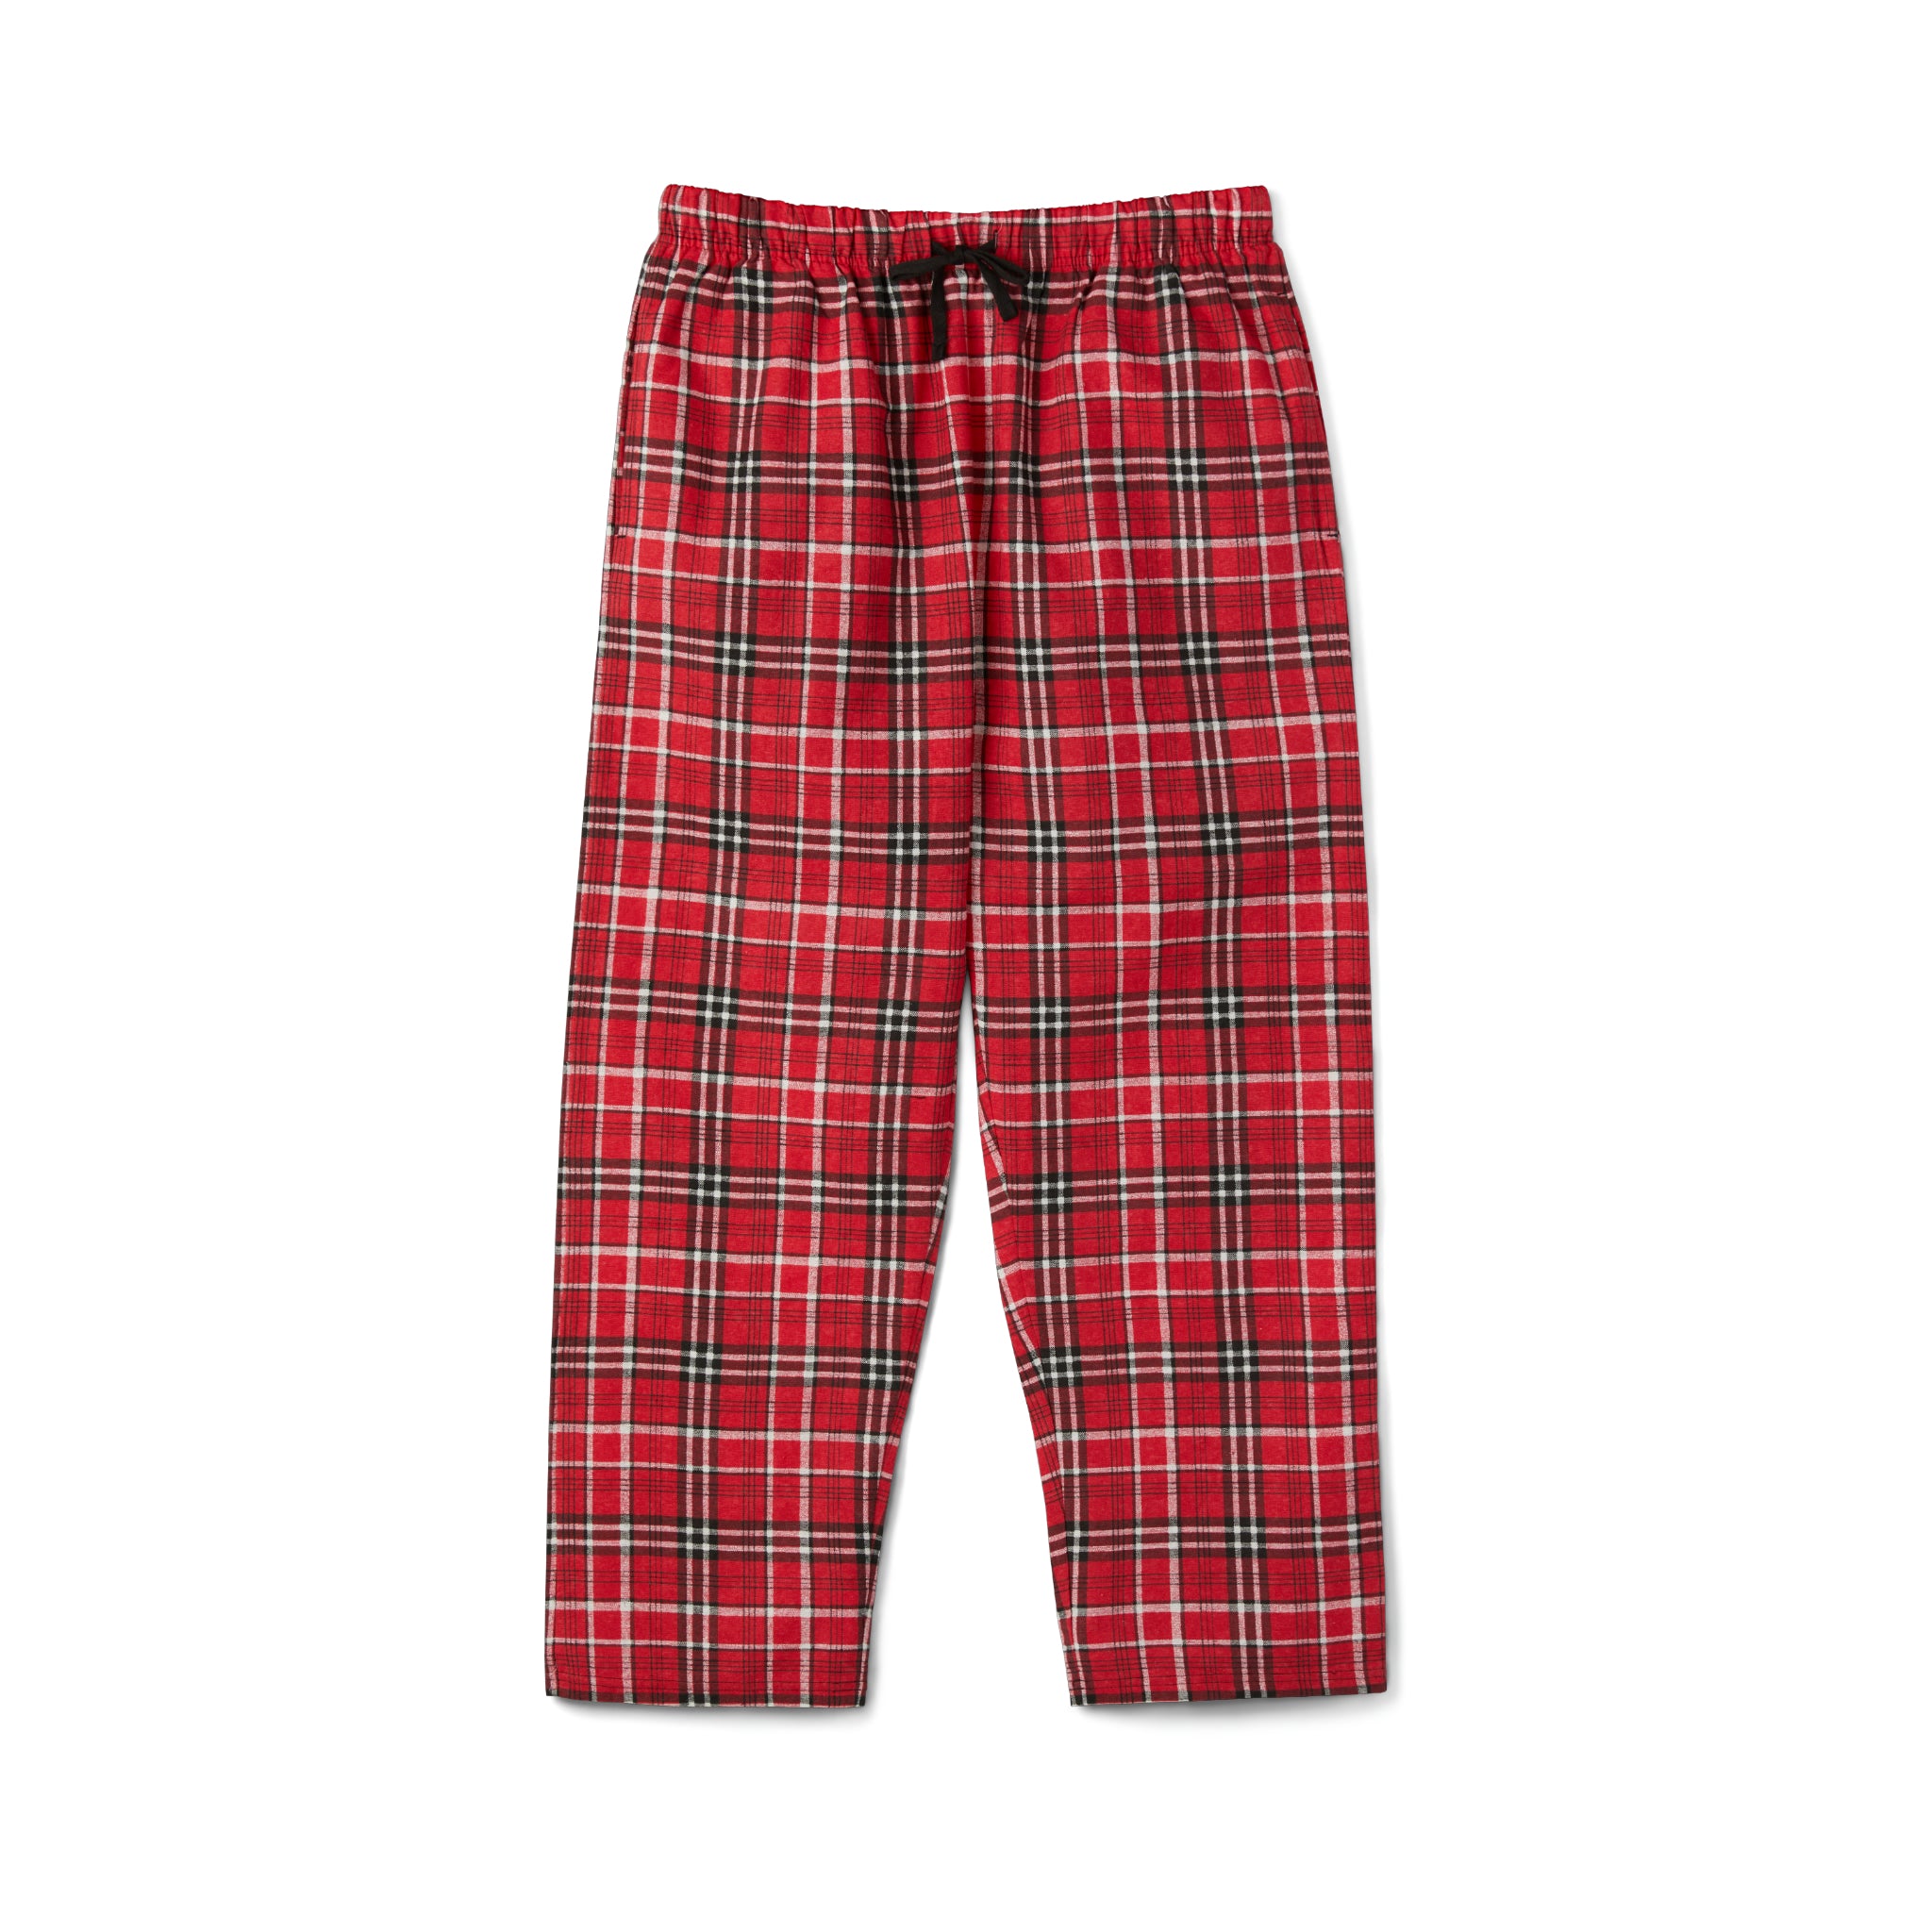 Men's Christmas Short Sleeve Pajama Set